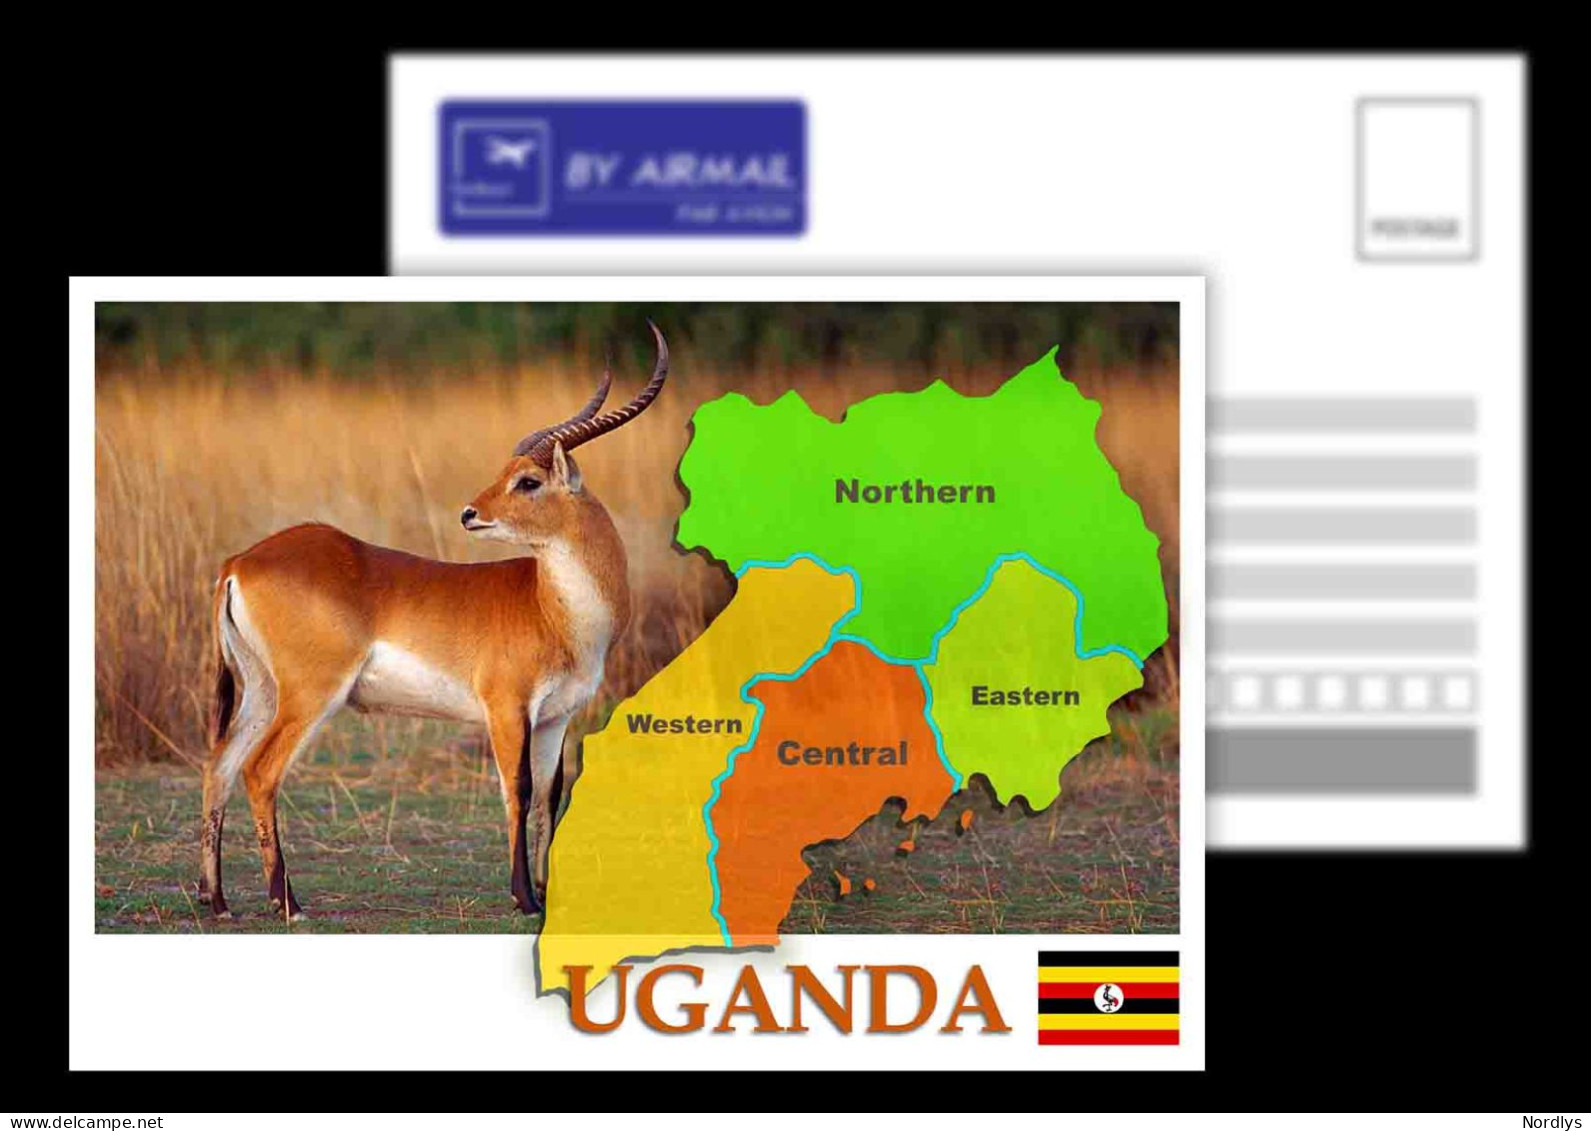 Uganda / View Card / Map Card - Uganda